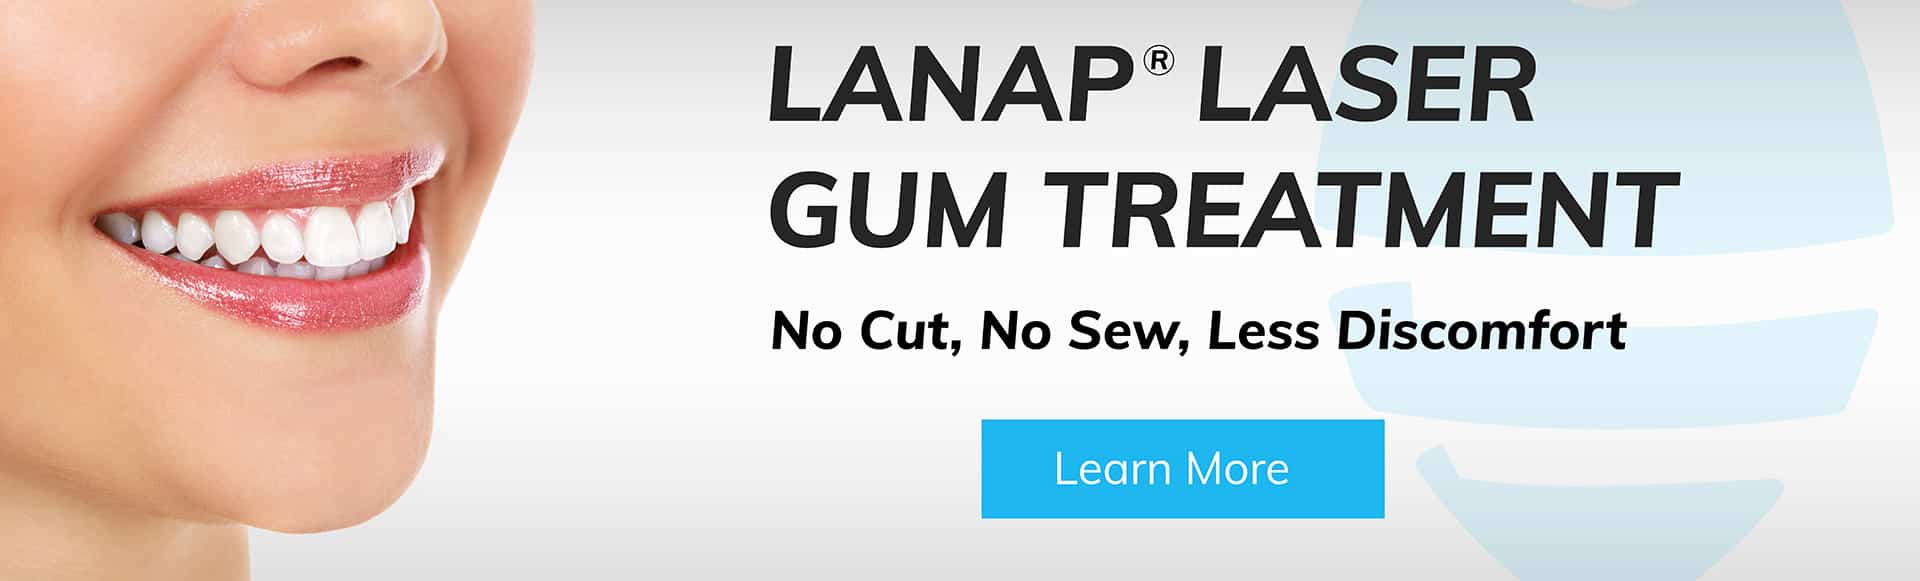 LANAP Laser Gum Treatment